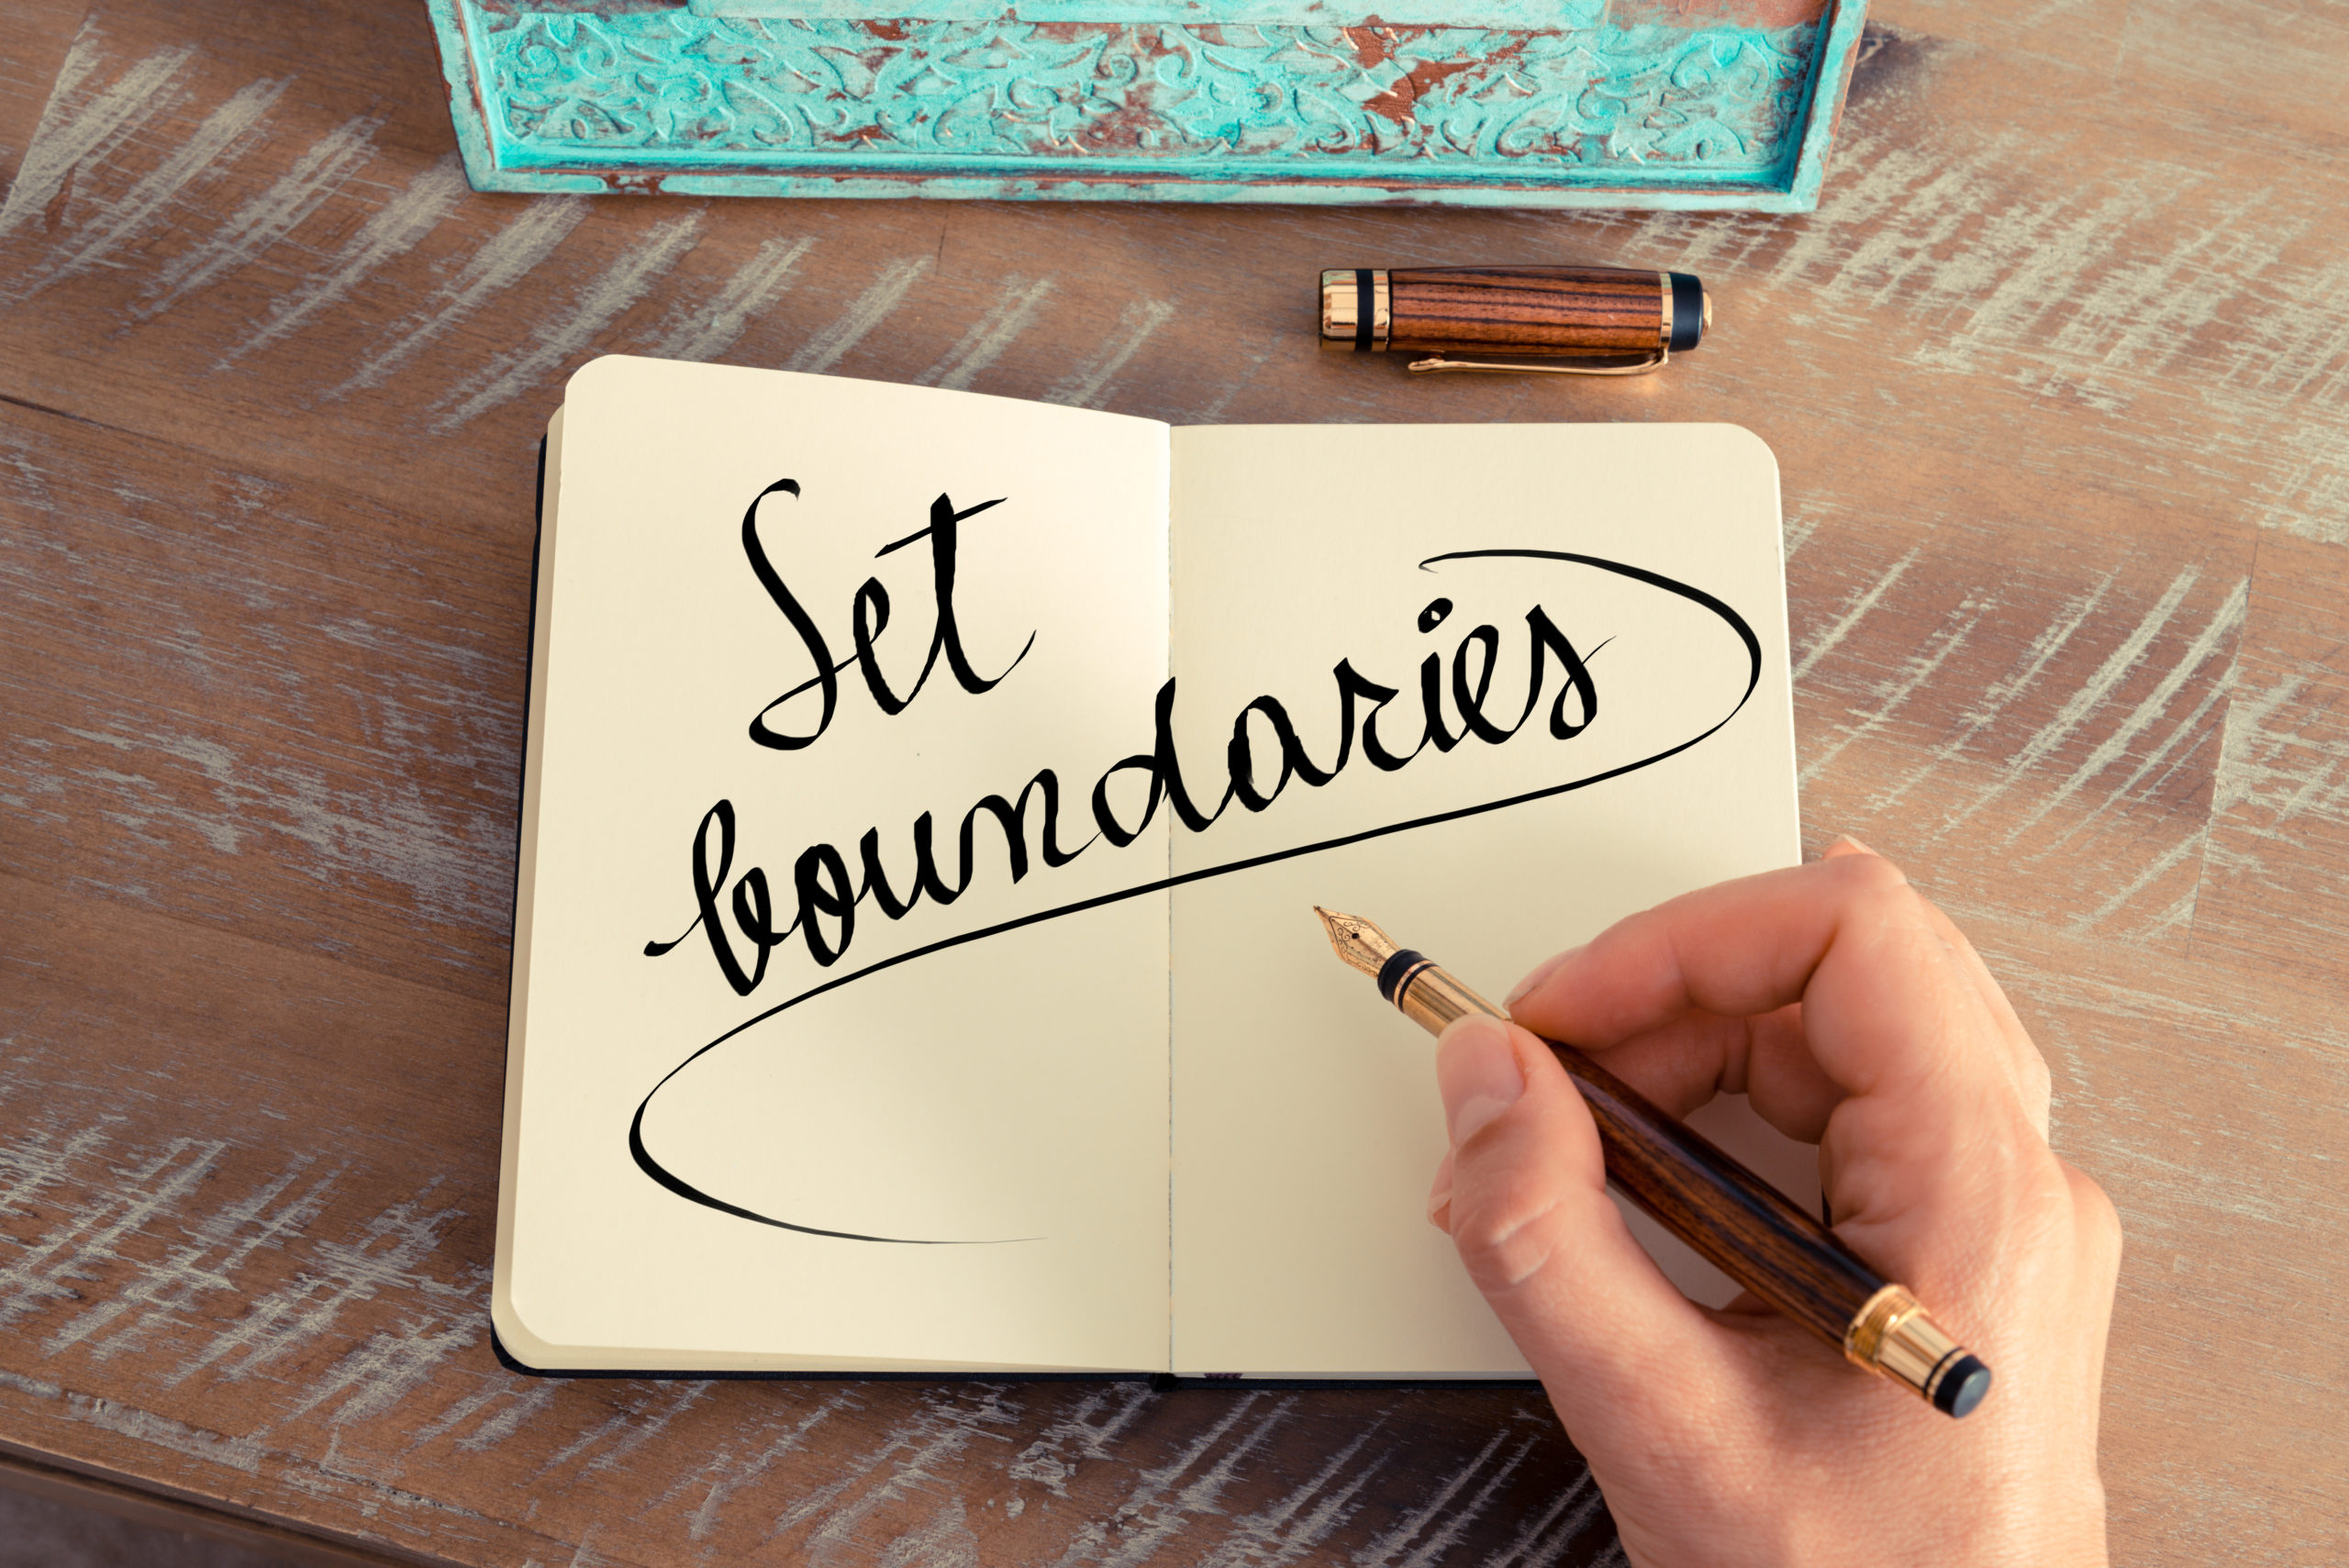 Set boundaries